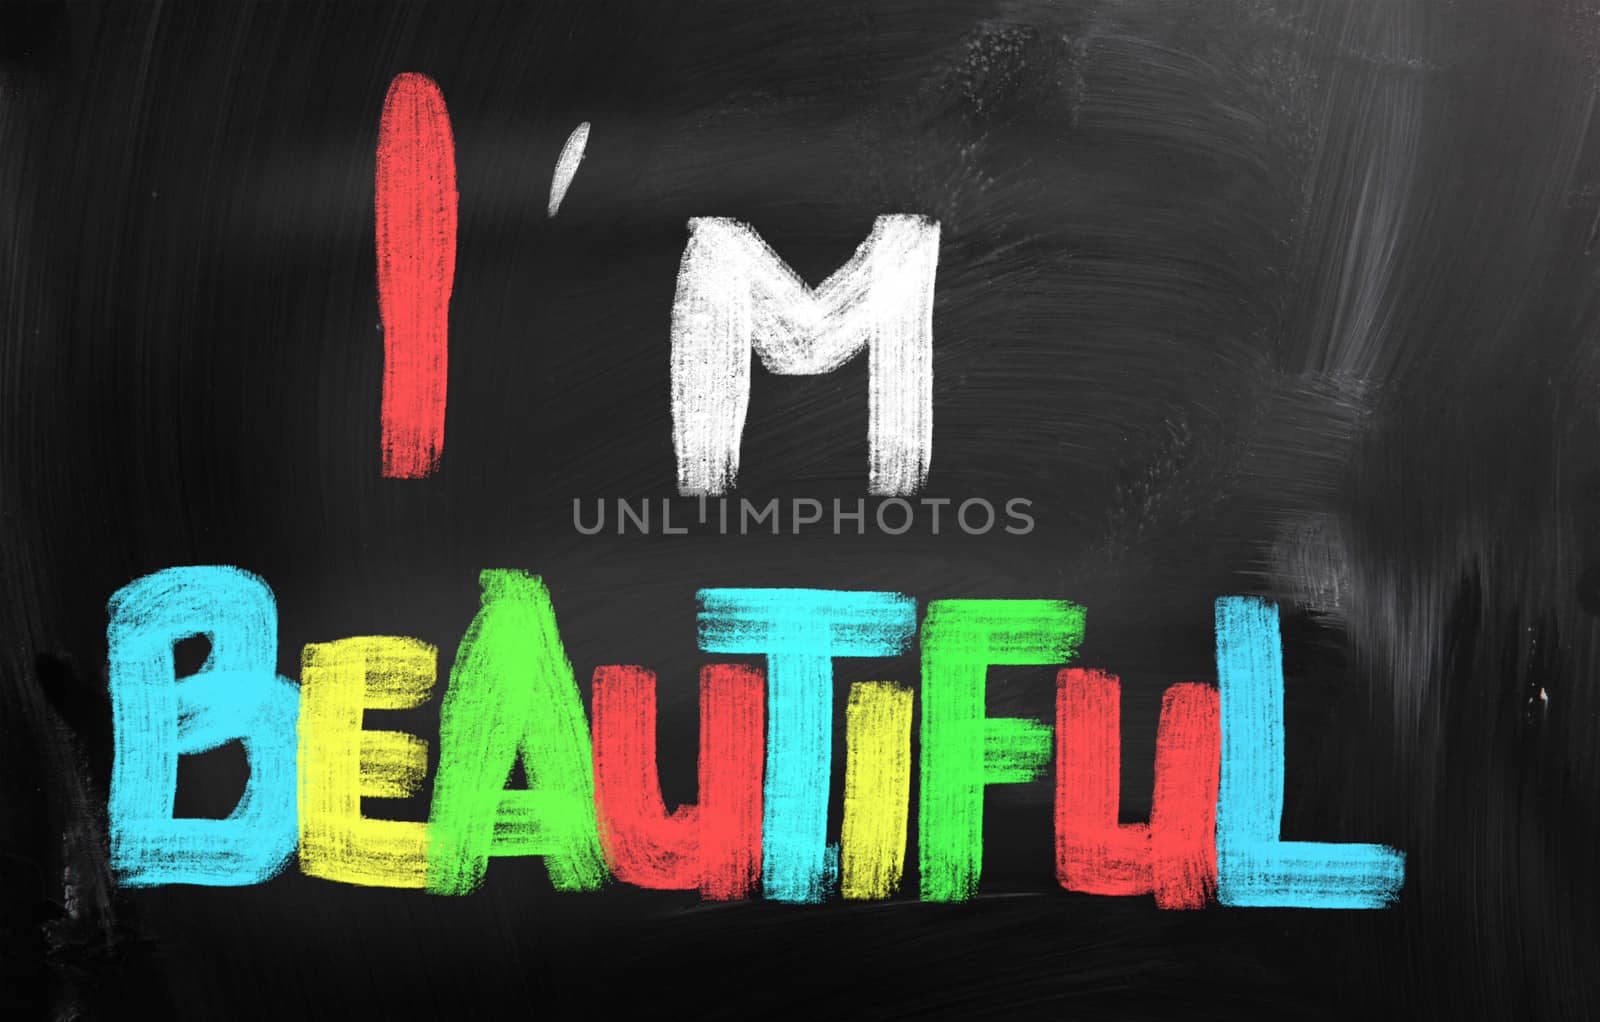 I Am Beautiful Concept by KrasimiraNevenova